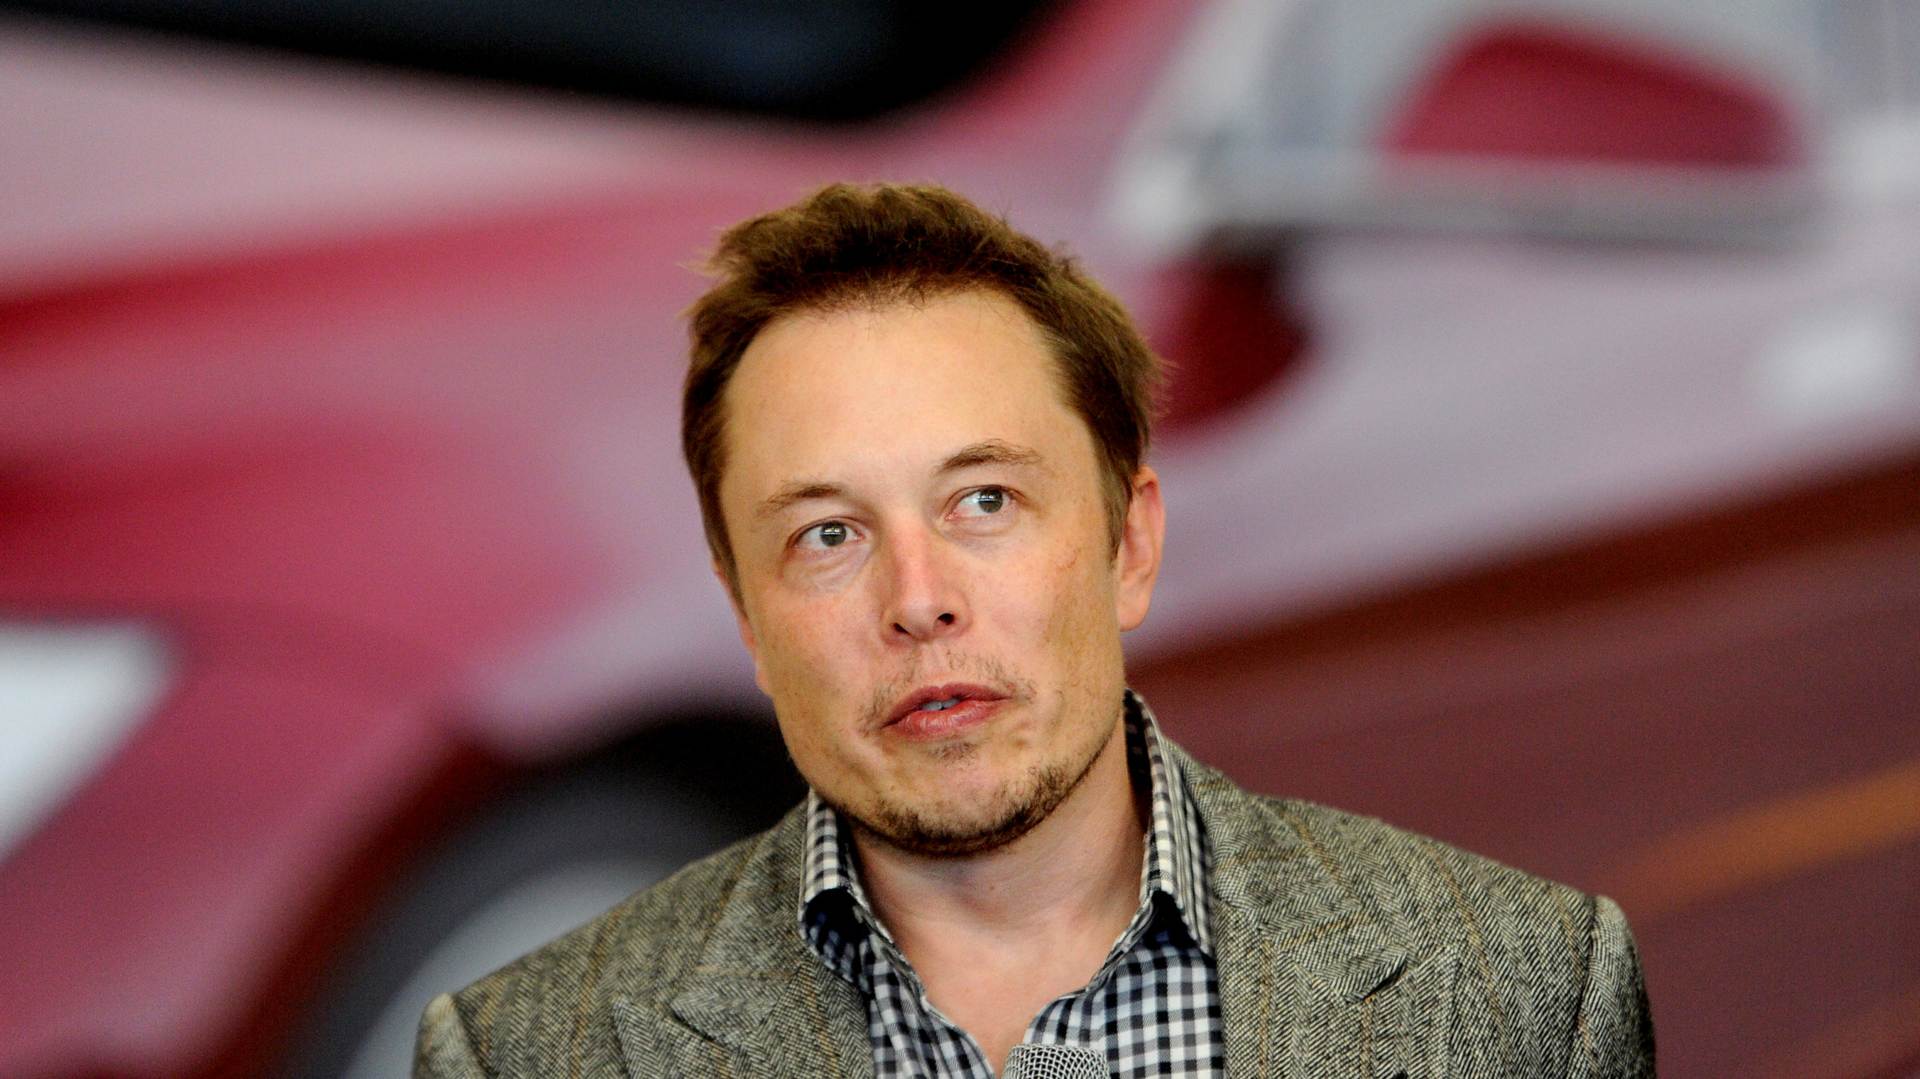 El organismo regulador de la bolsa estadounidense acusa a Elon Musk de fraude